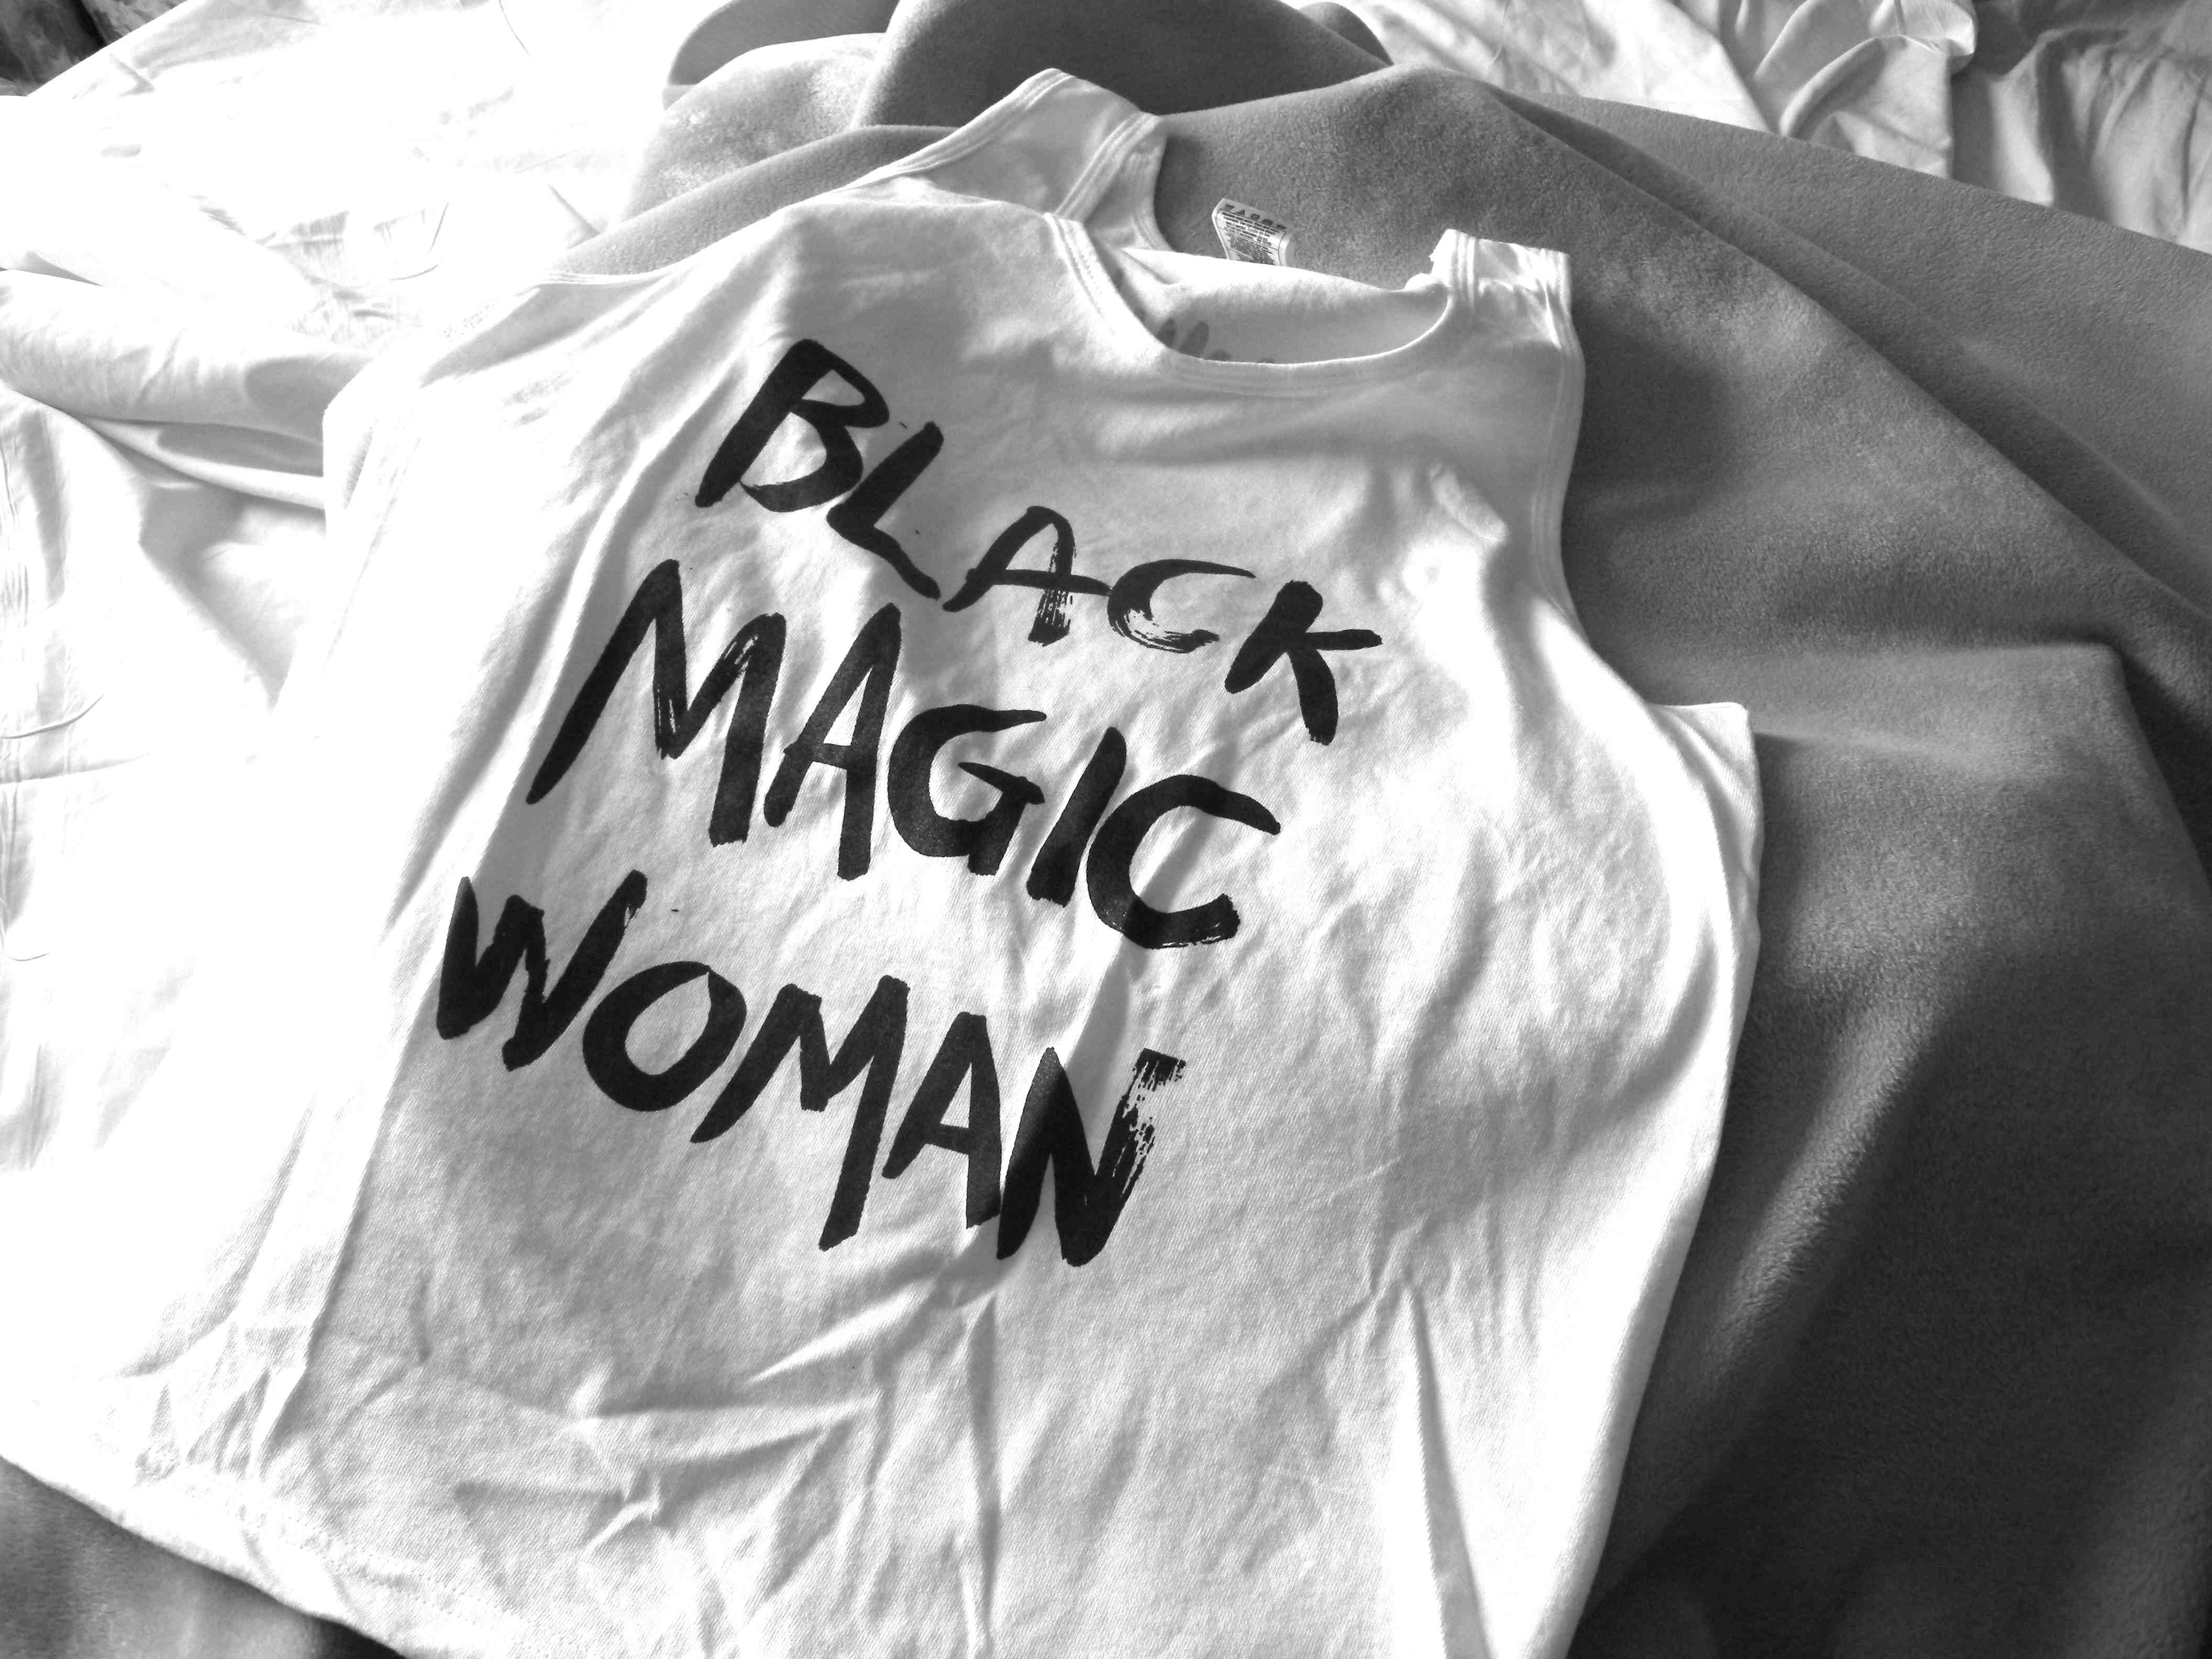 Black magic woman photo